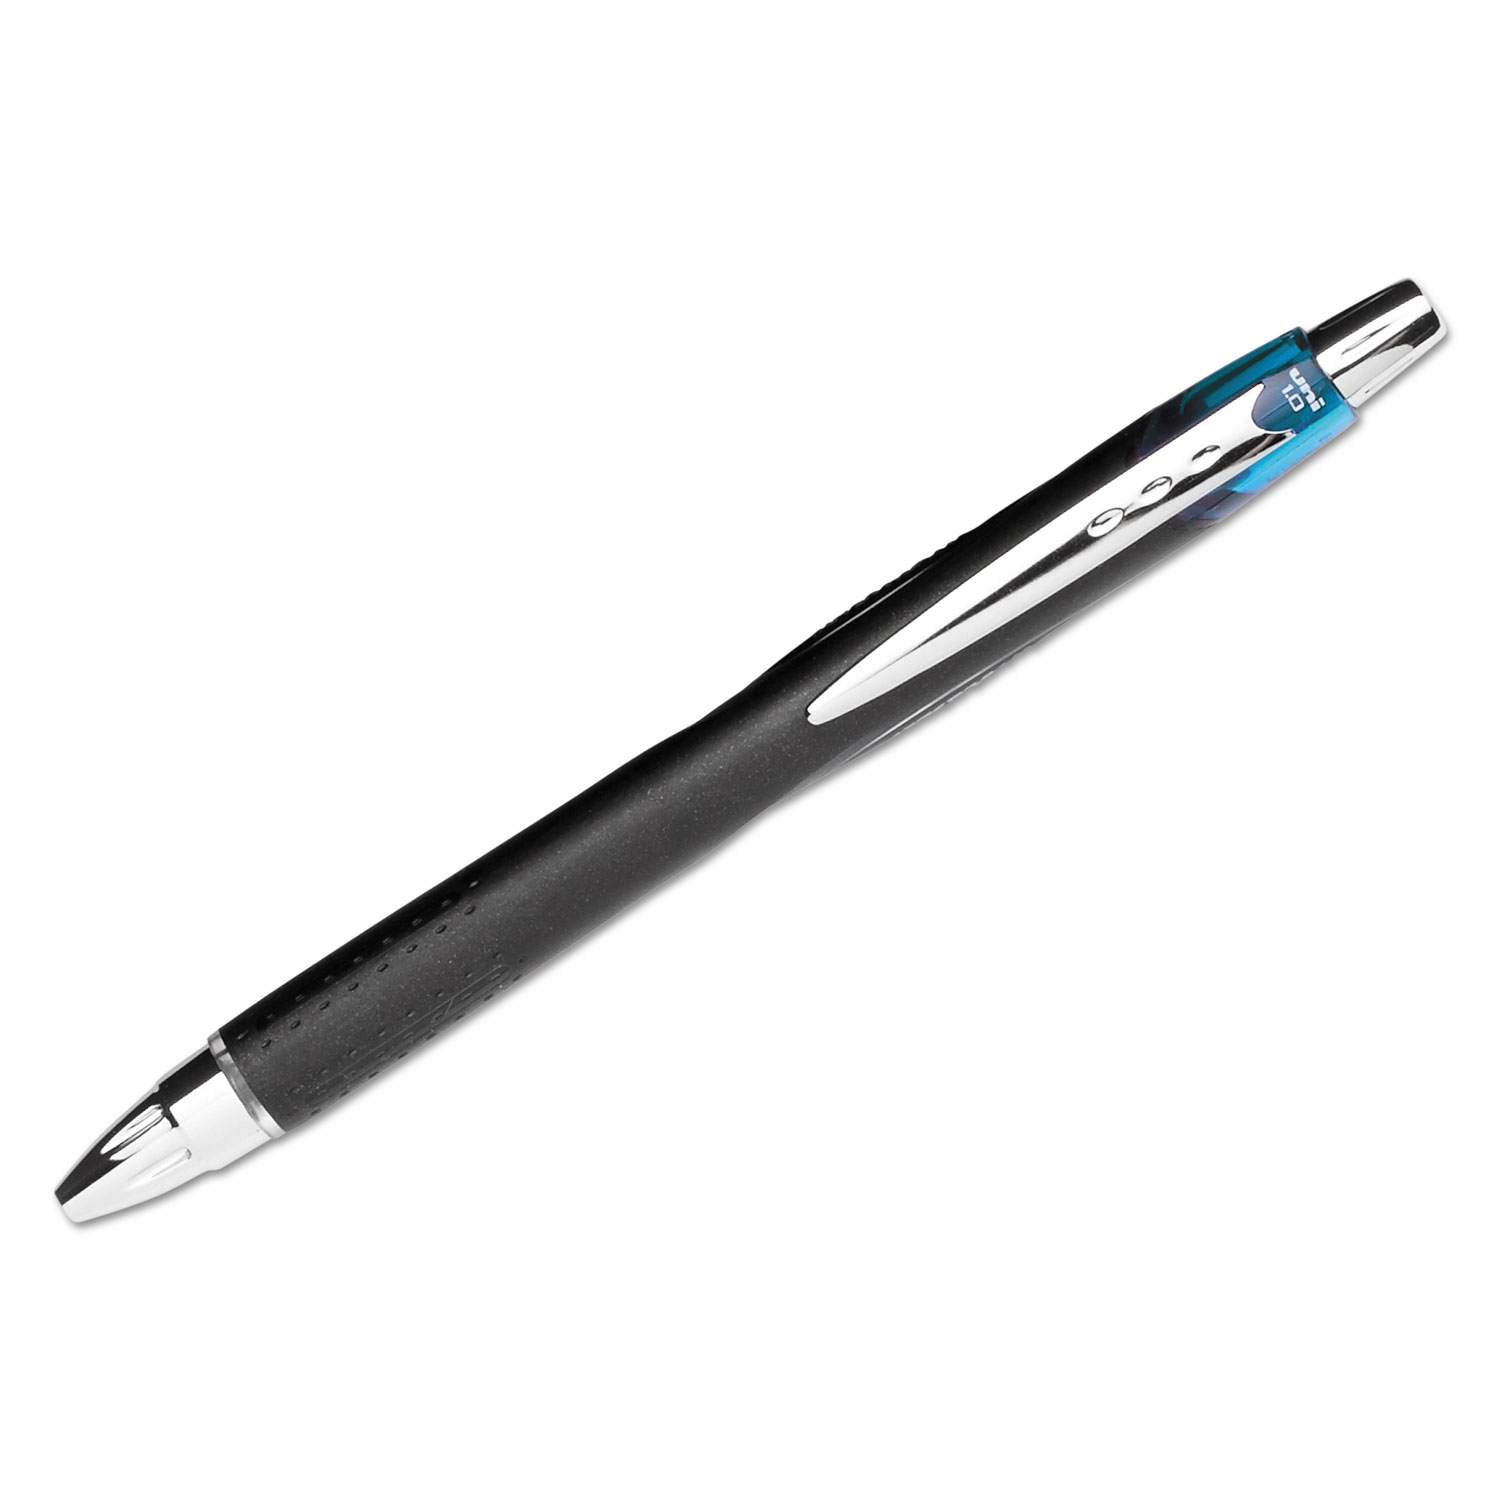 Jetstream RT Retractable Roller Ball Pen, Bold 1mm, Blue Ink, Black Barrel